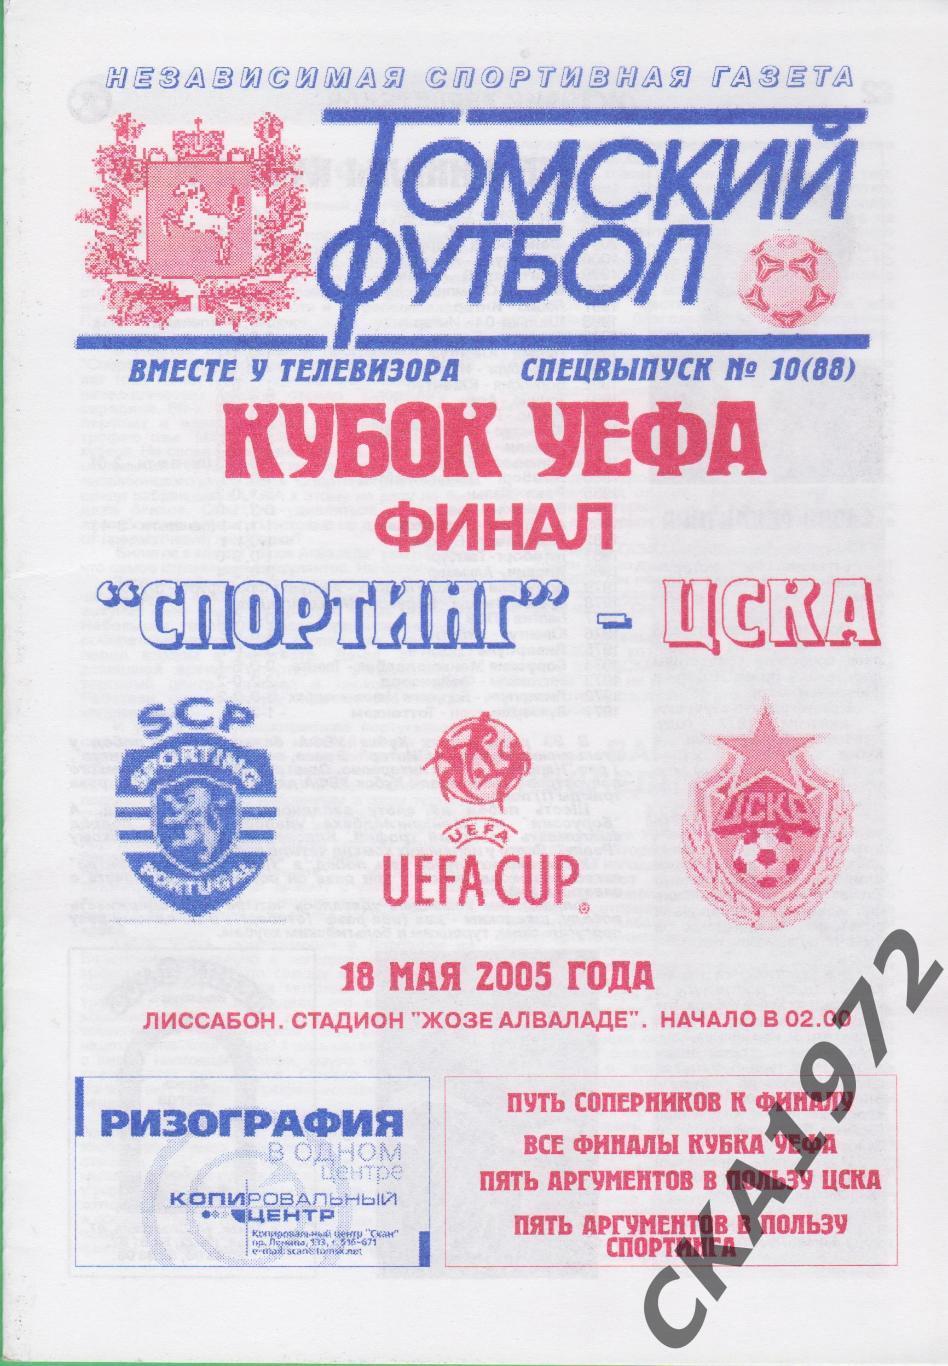 программа Спортинг Португалия - ЦСКА Москва 2005 Кубок УЕФА финал +++